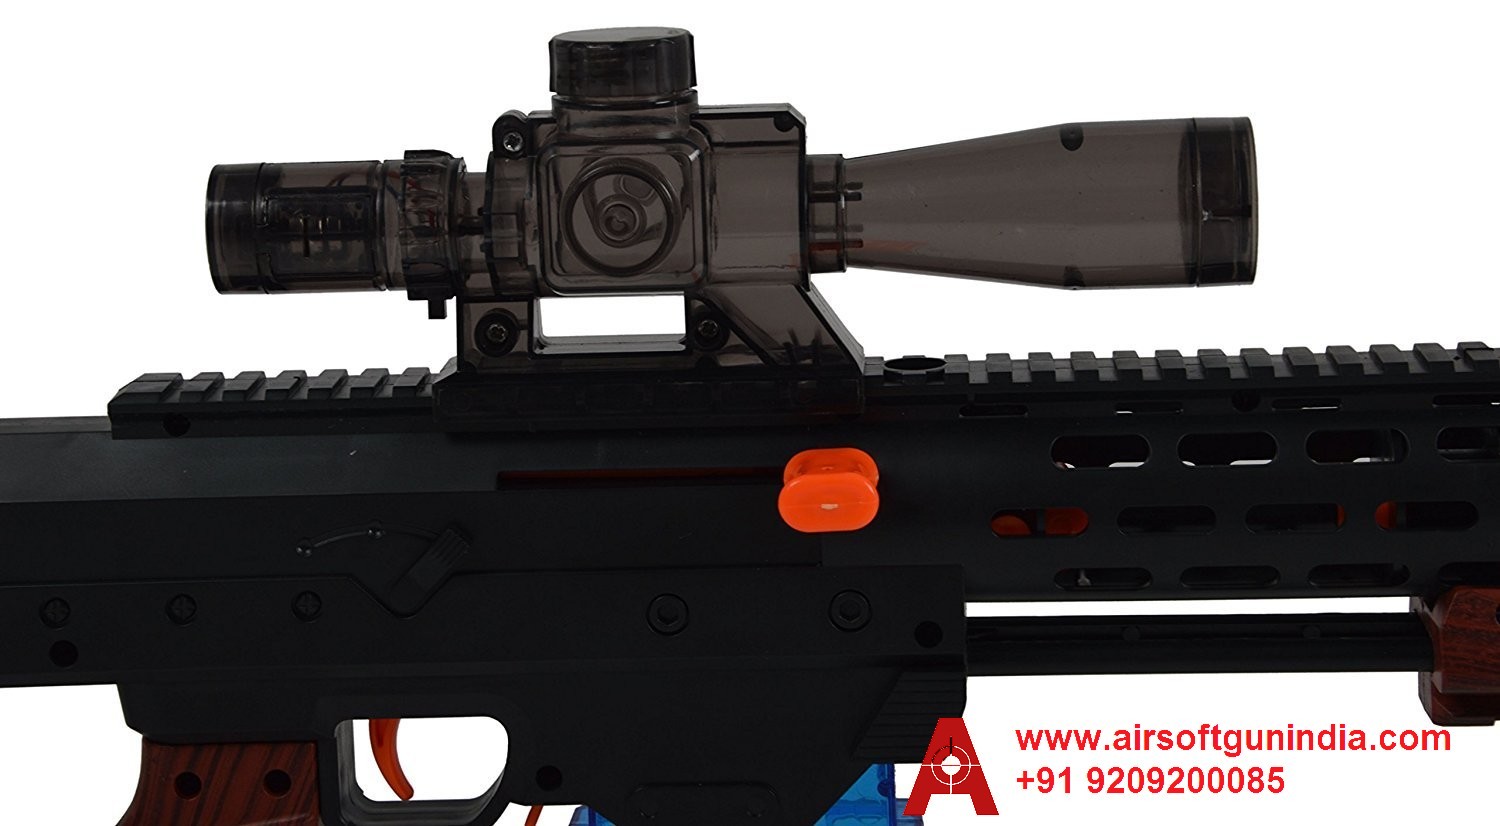 PUBG ASSAULT RIFLE By Airsoft Gun India